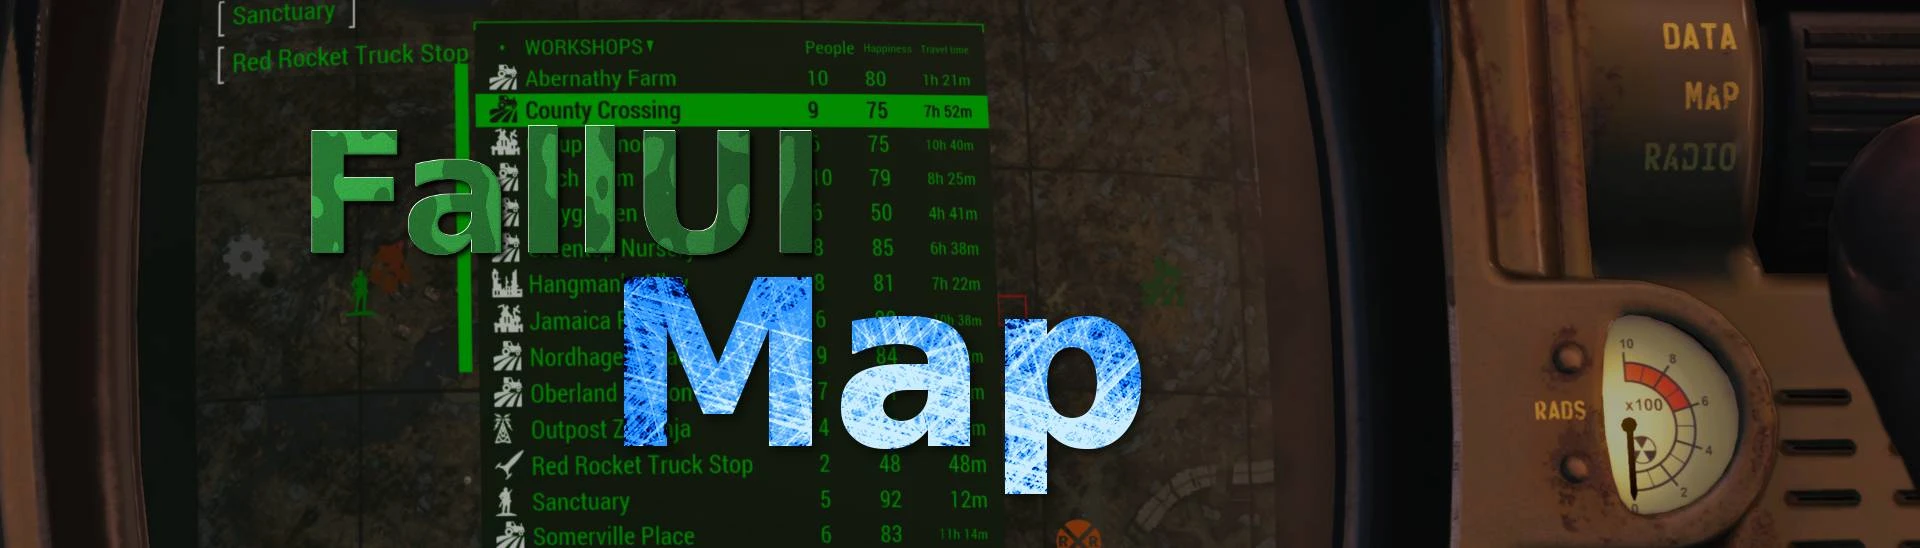 Fallout 3 HUD - A FallUI HUD layout at Fallout 4 Nexus - Mods and community